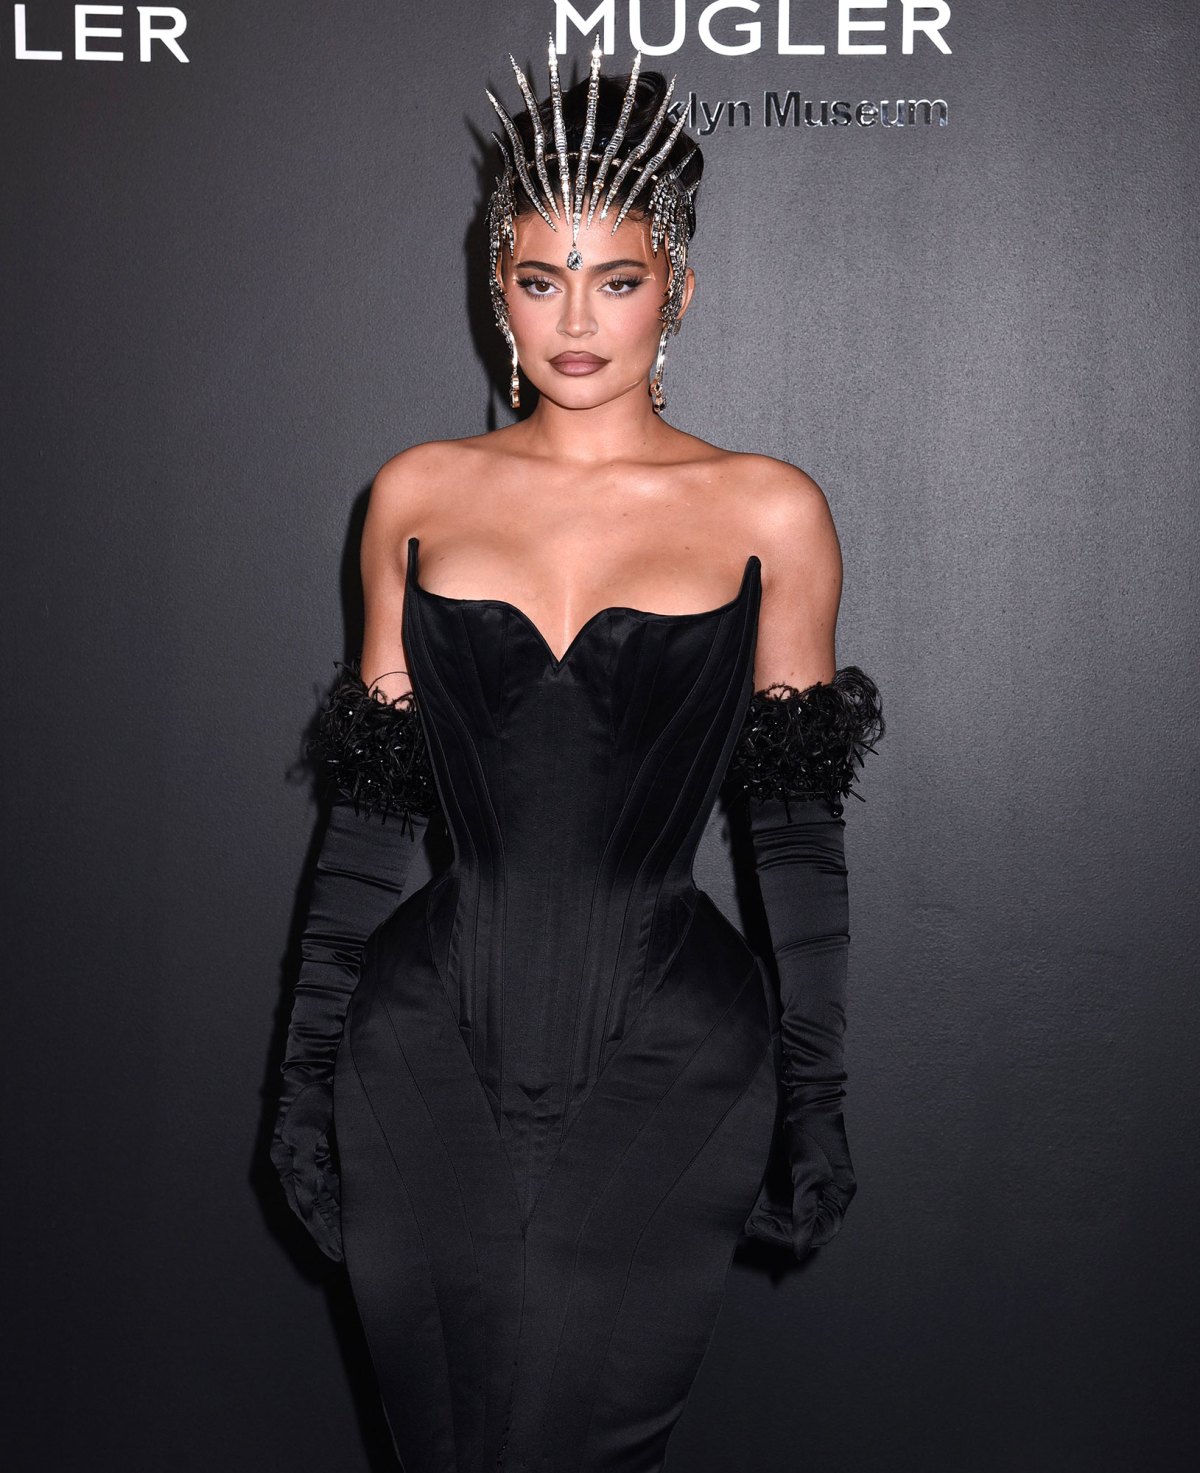 Kylie Jenner slips into Versace dress on Life Of Kylie